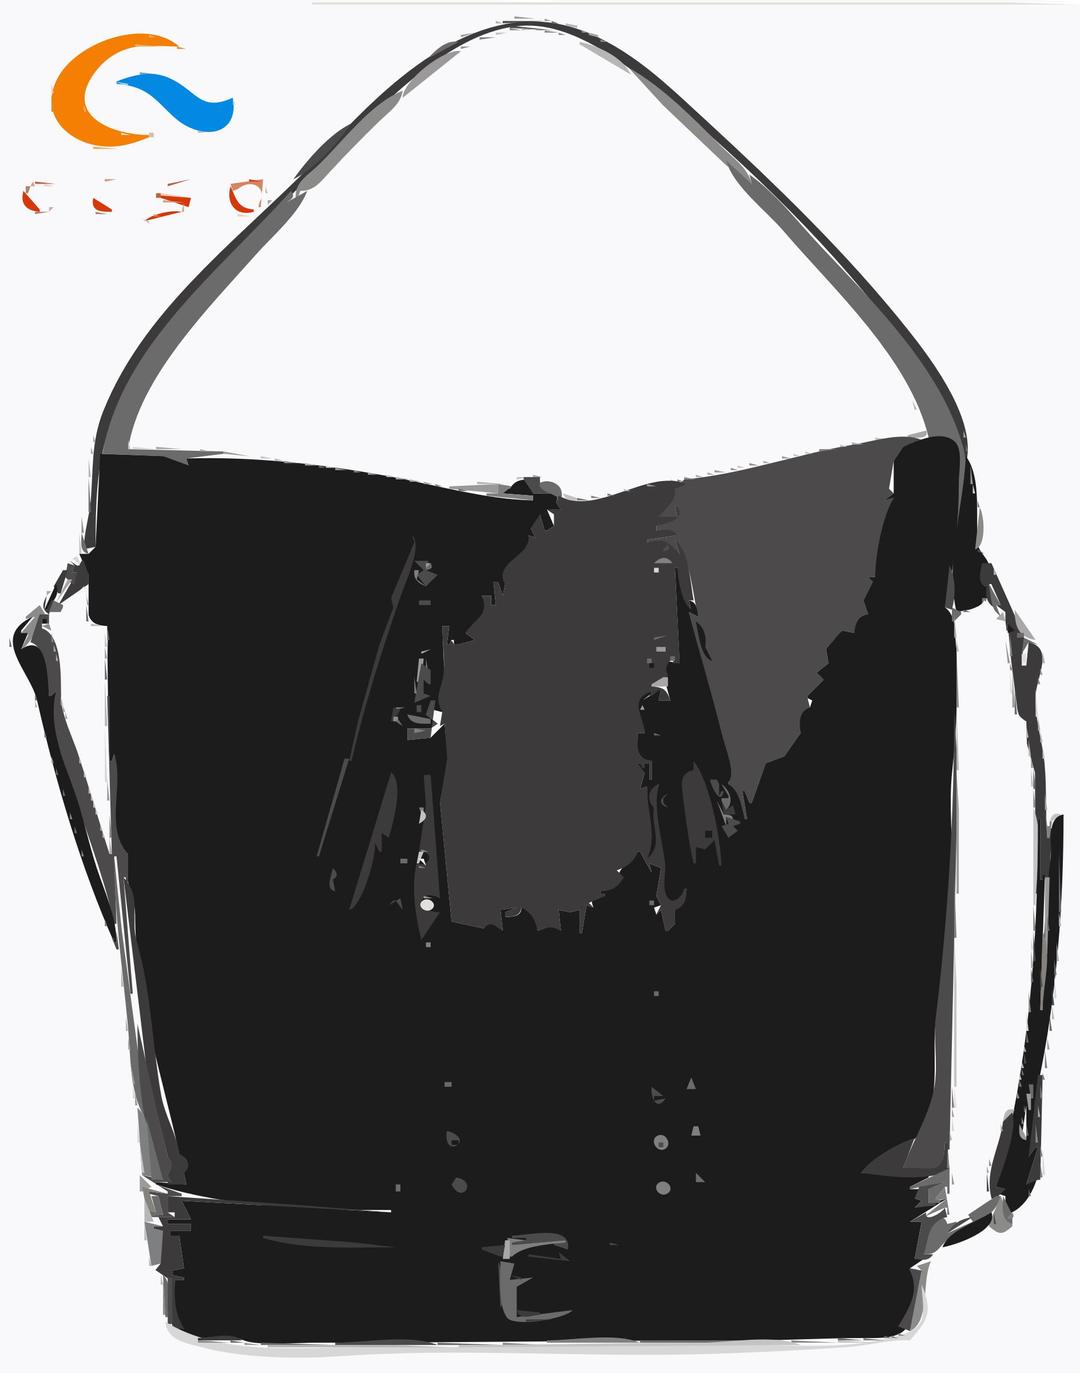 Black handbag png transparent